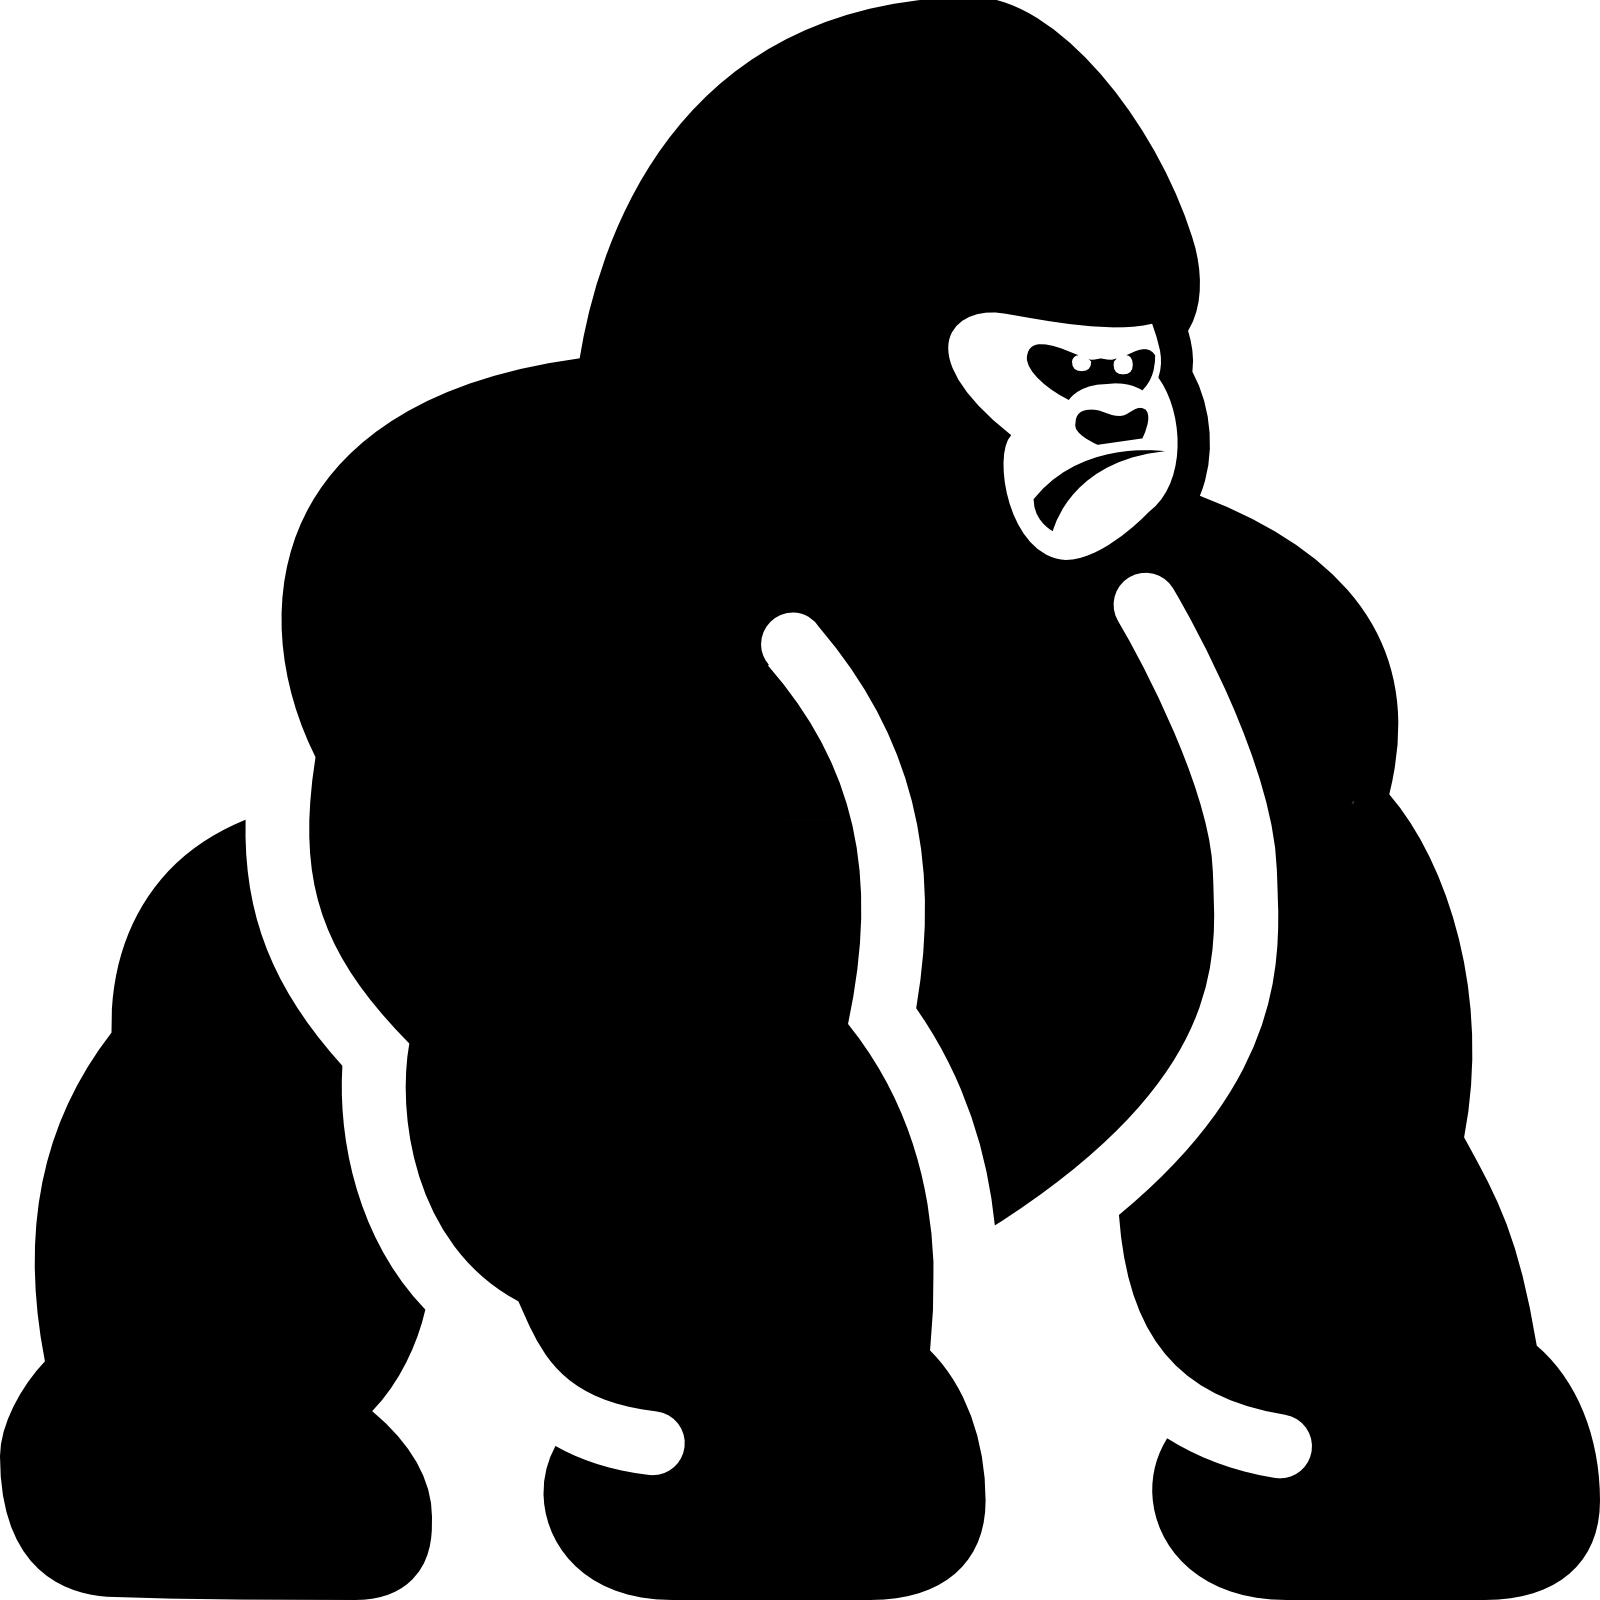 Gorilla clipart king kong, Picture #1241197 gorilla clipart king kong